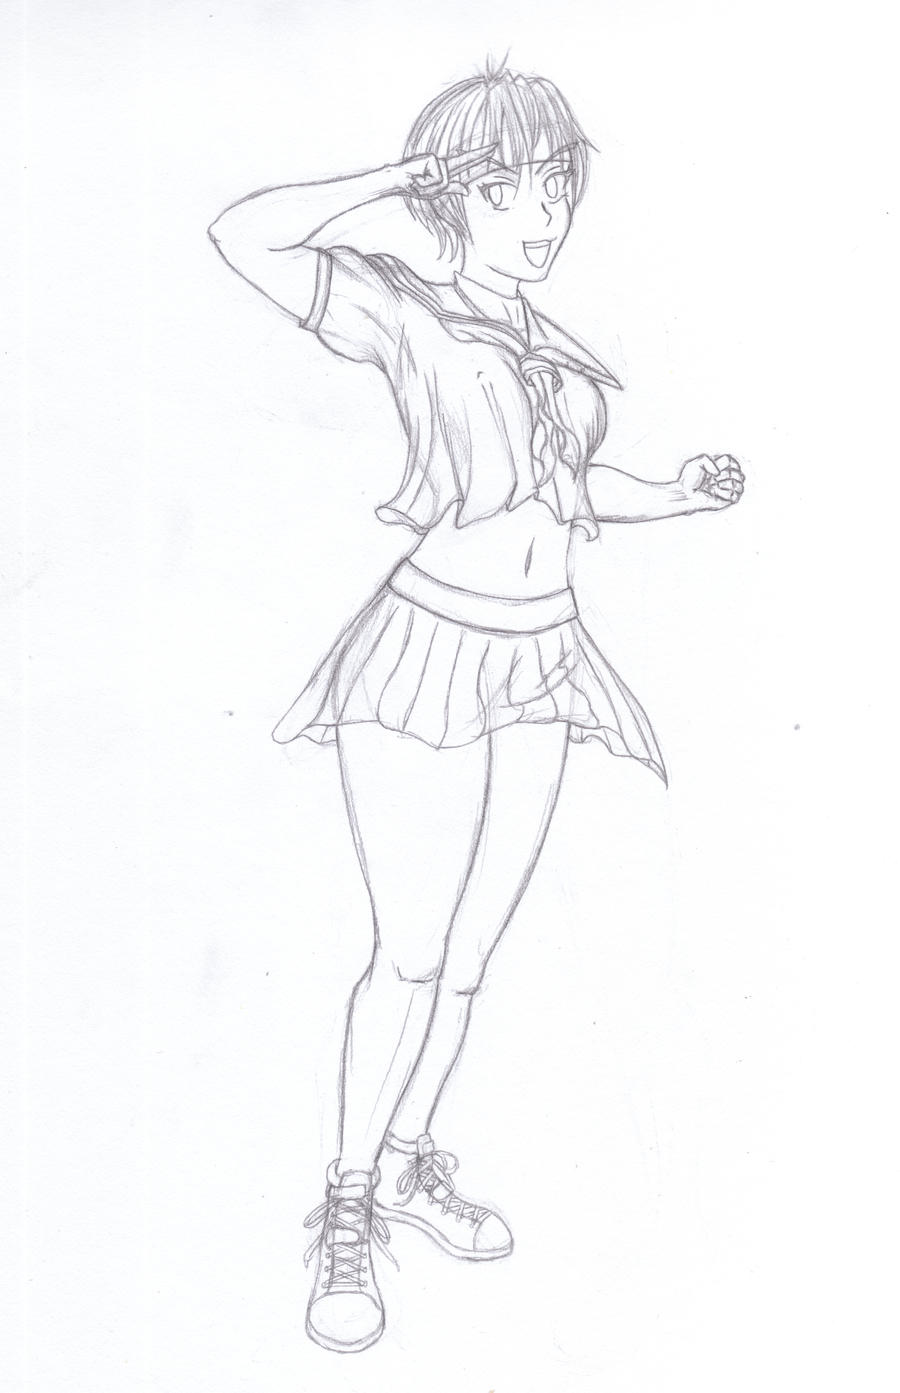 Sakura Street Fighter Sketch by Visualiart on DeviantArt